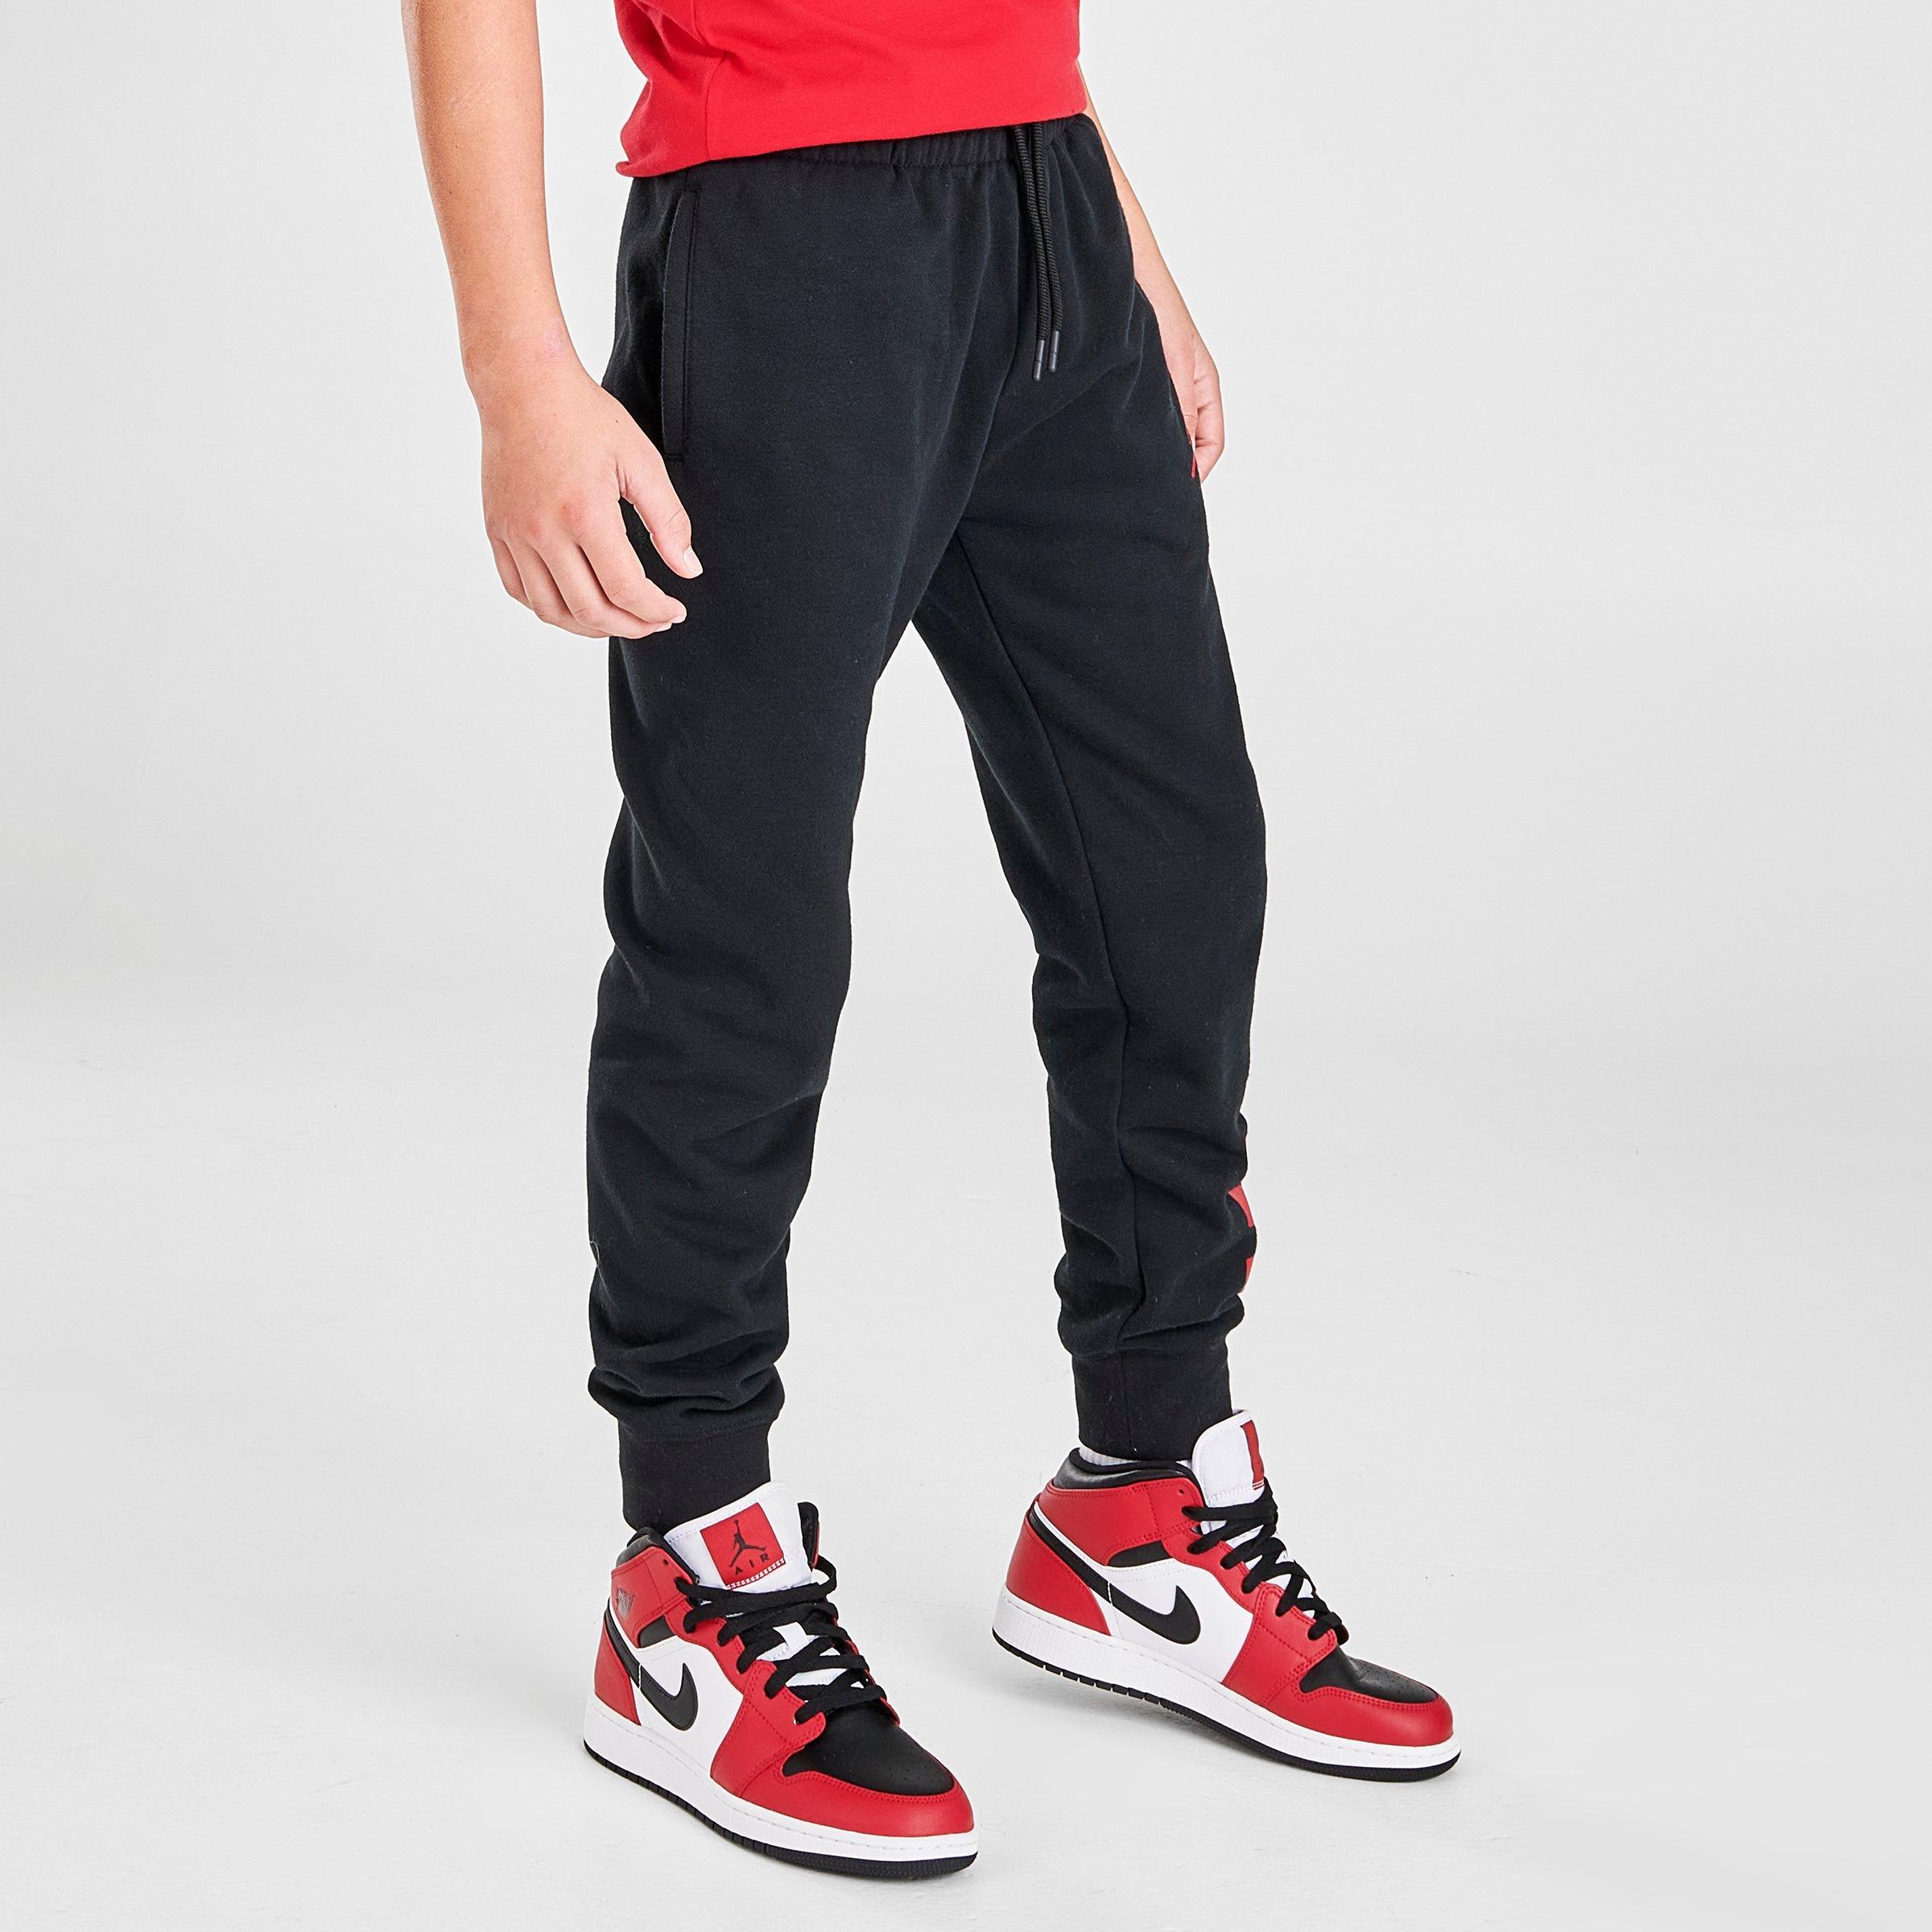 jogger pants with jordan shoes